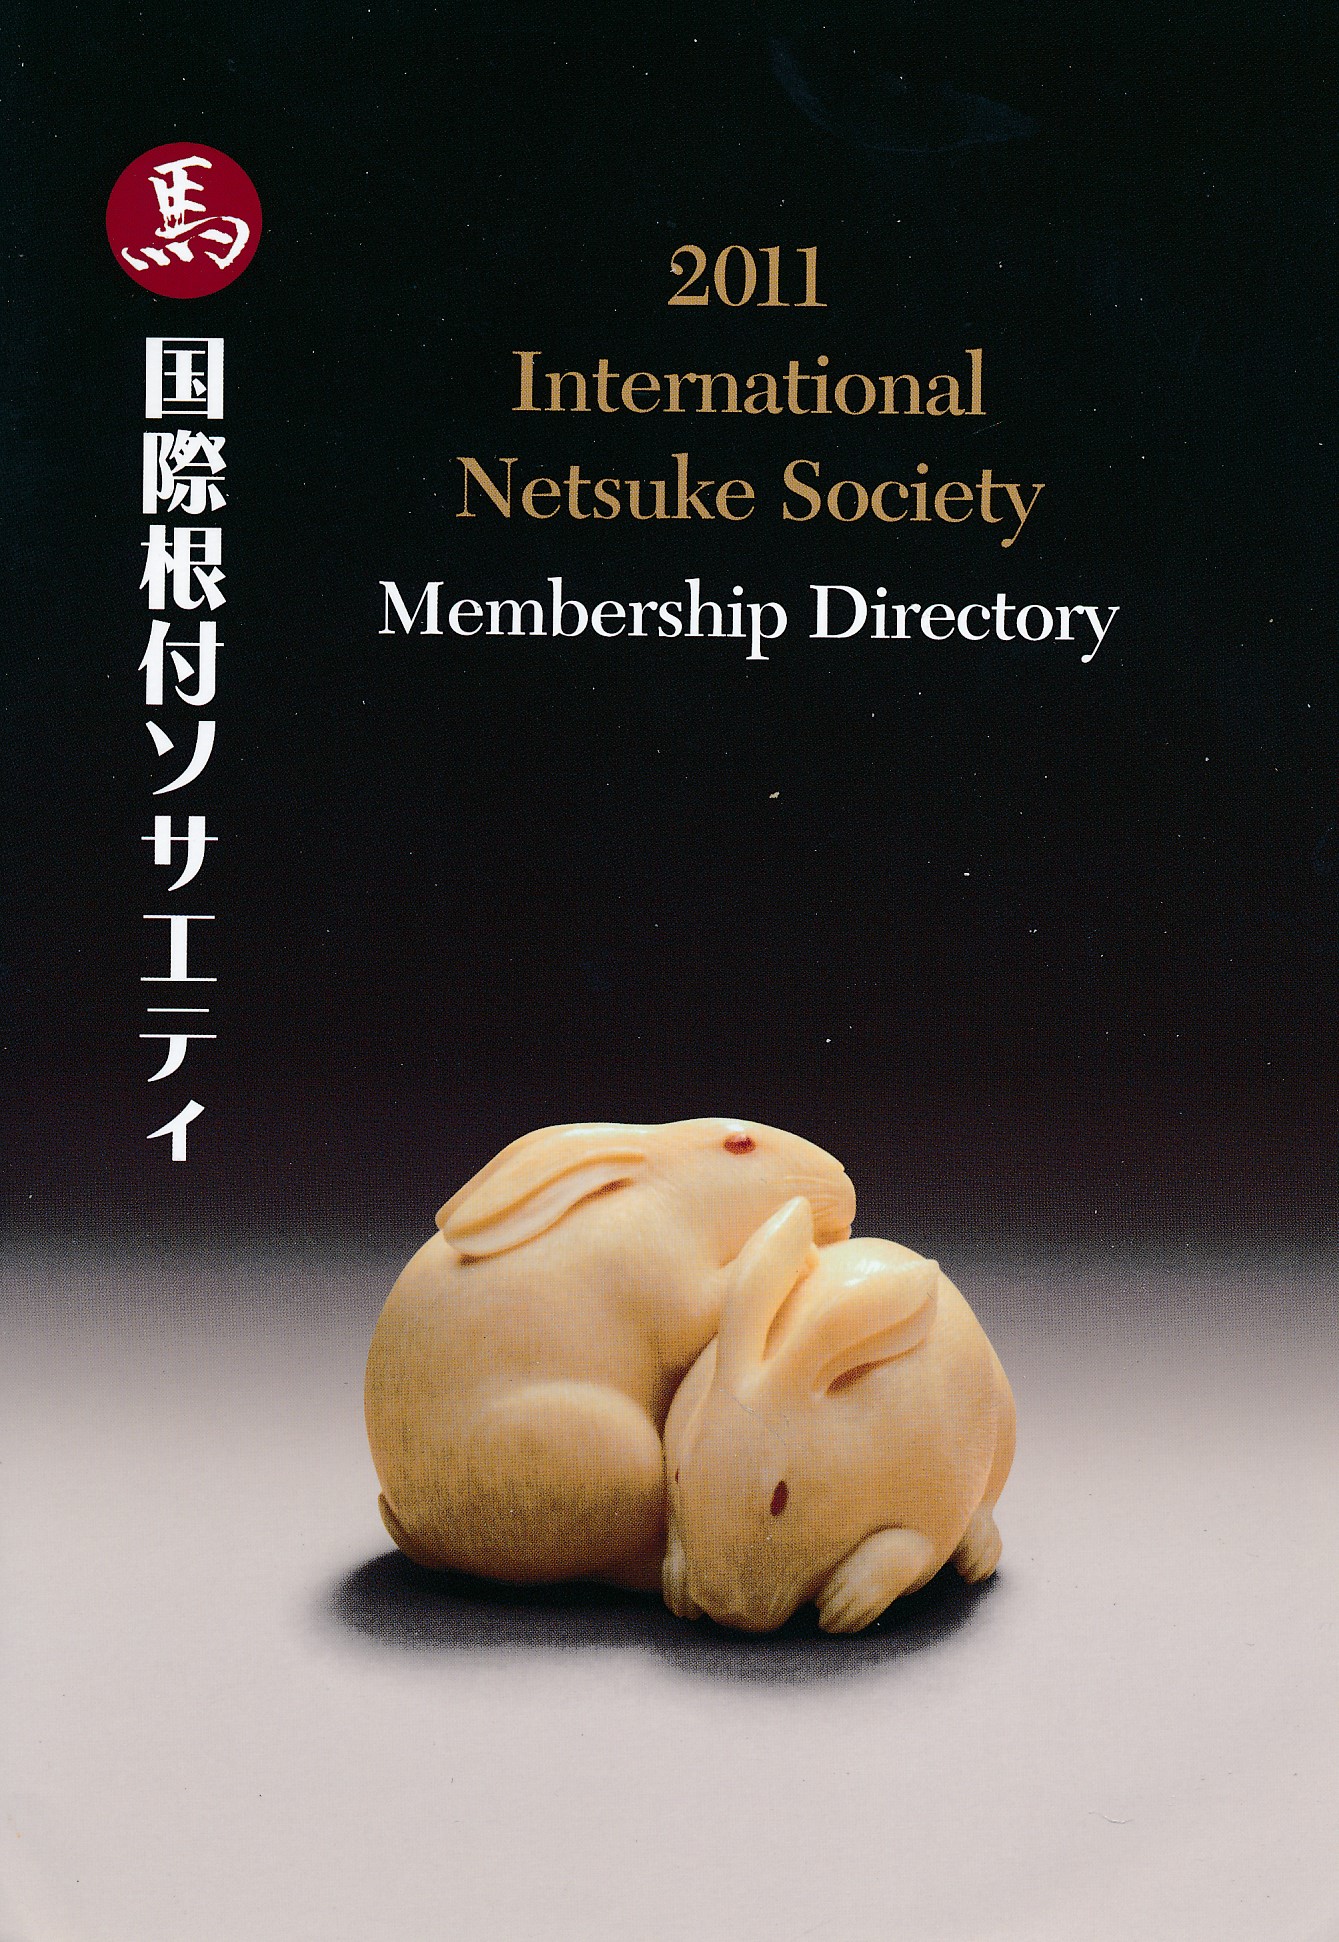 International Netsuke Society. 2011. Membership Directory.